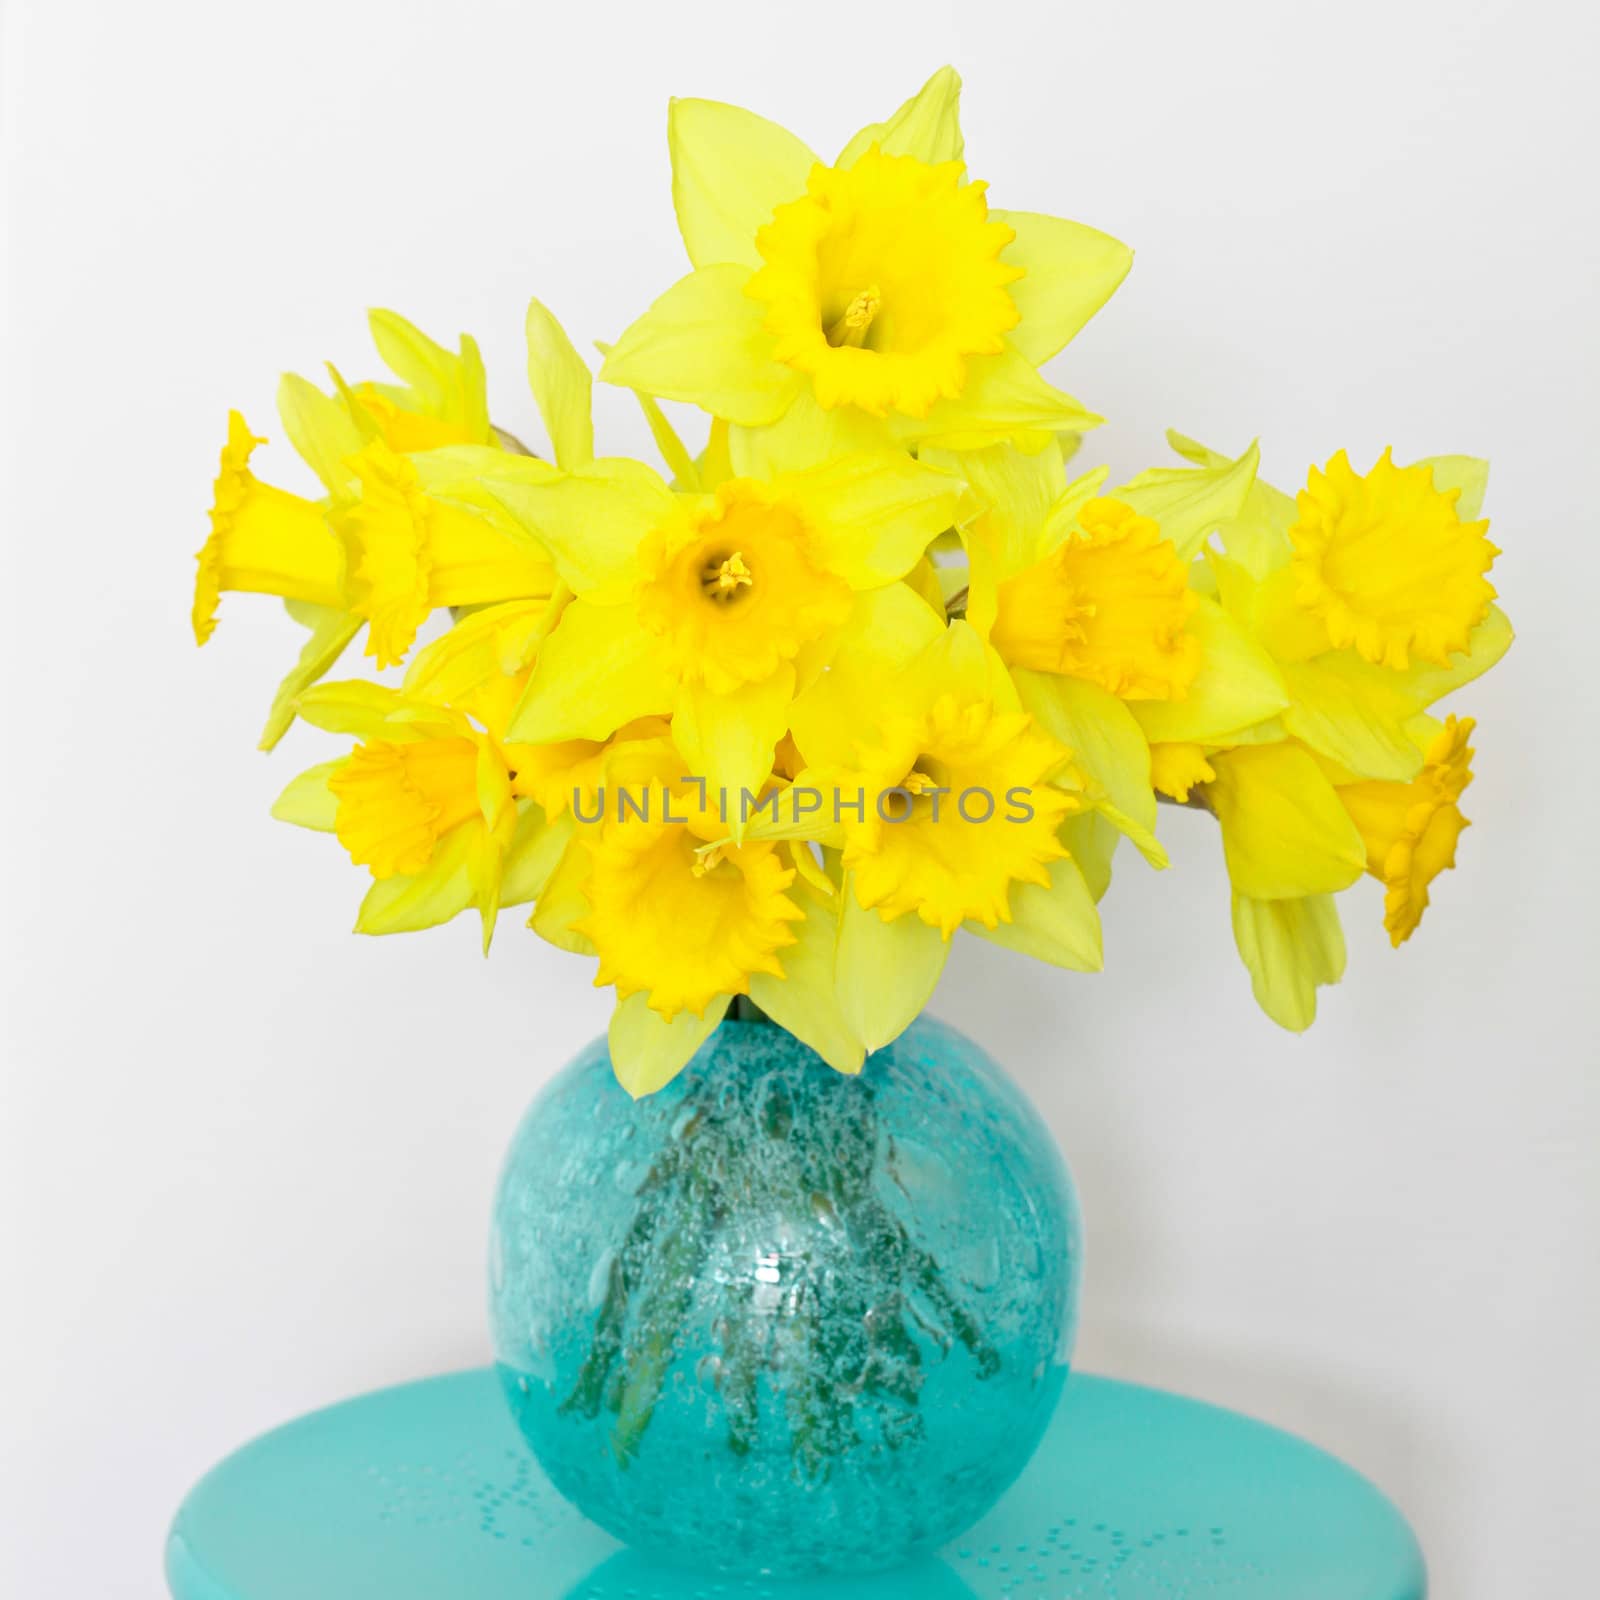 Beautiful bunch of fresh spring daffoldils in a glass vase